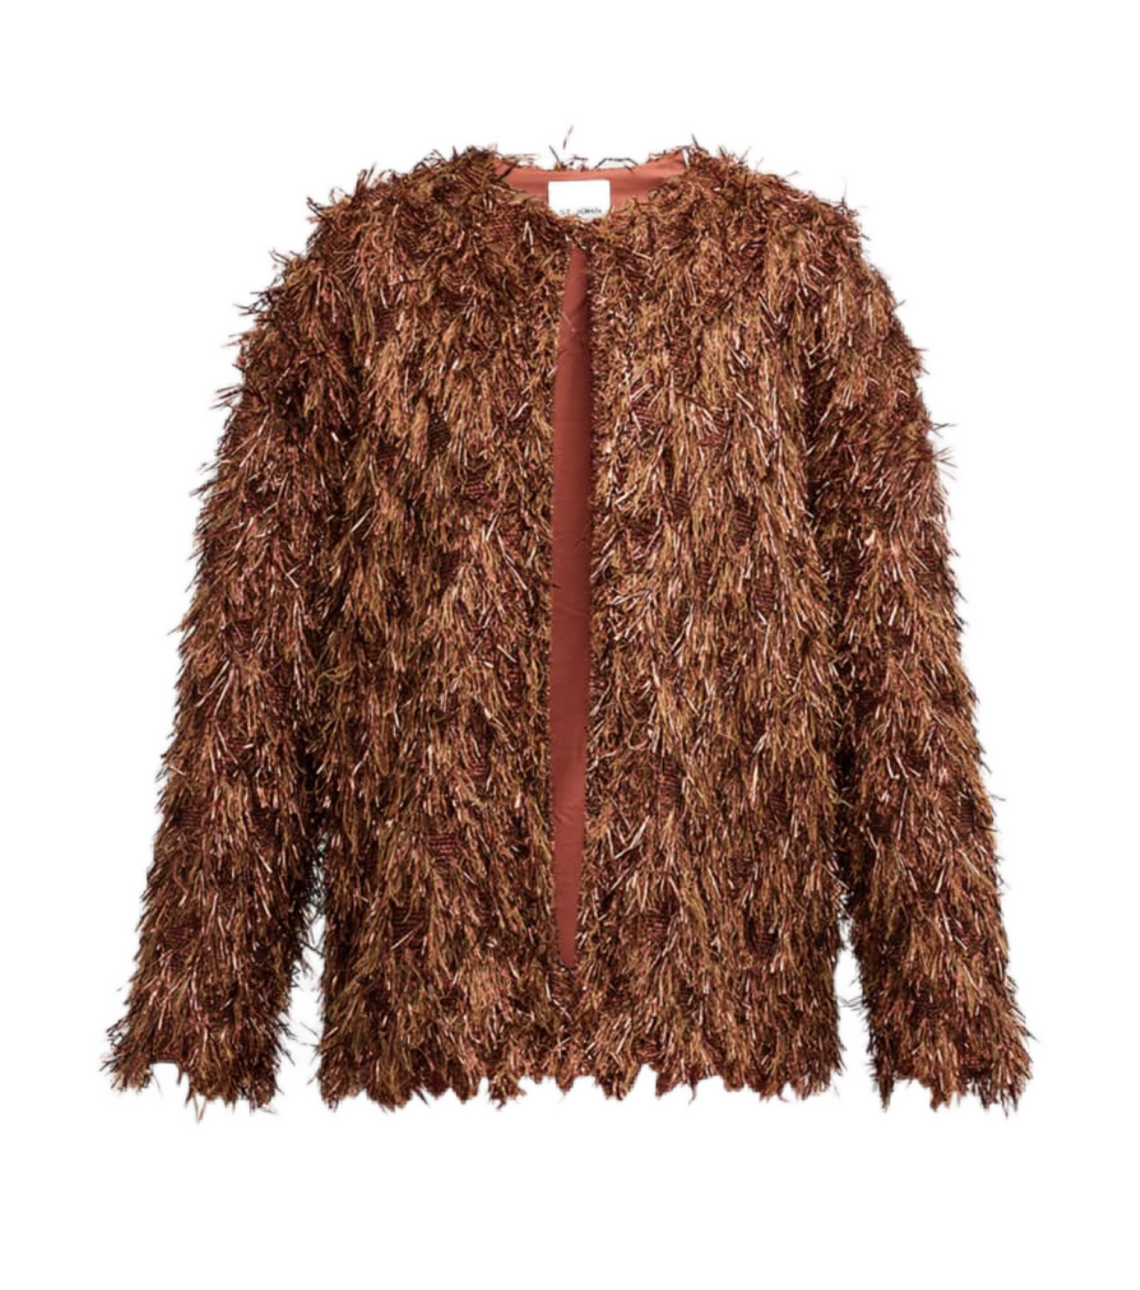 Metallic Sequin Faux-Fur Fringe Knit Jacket